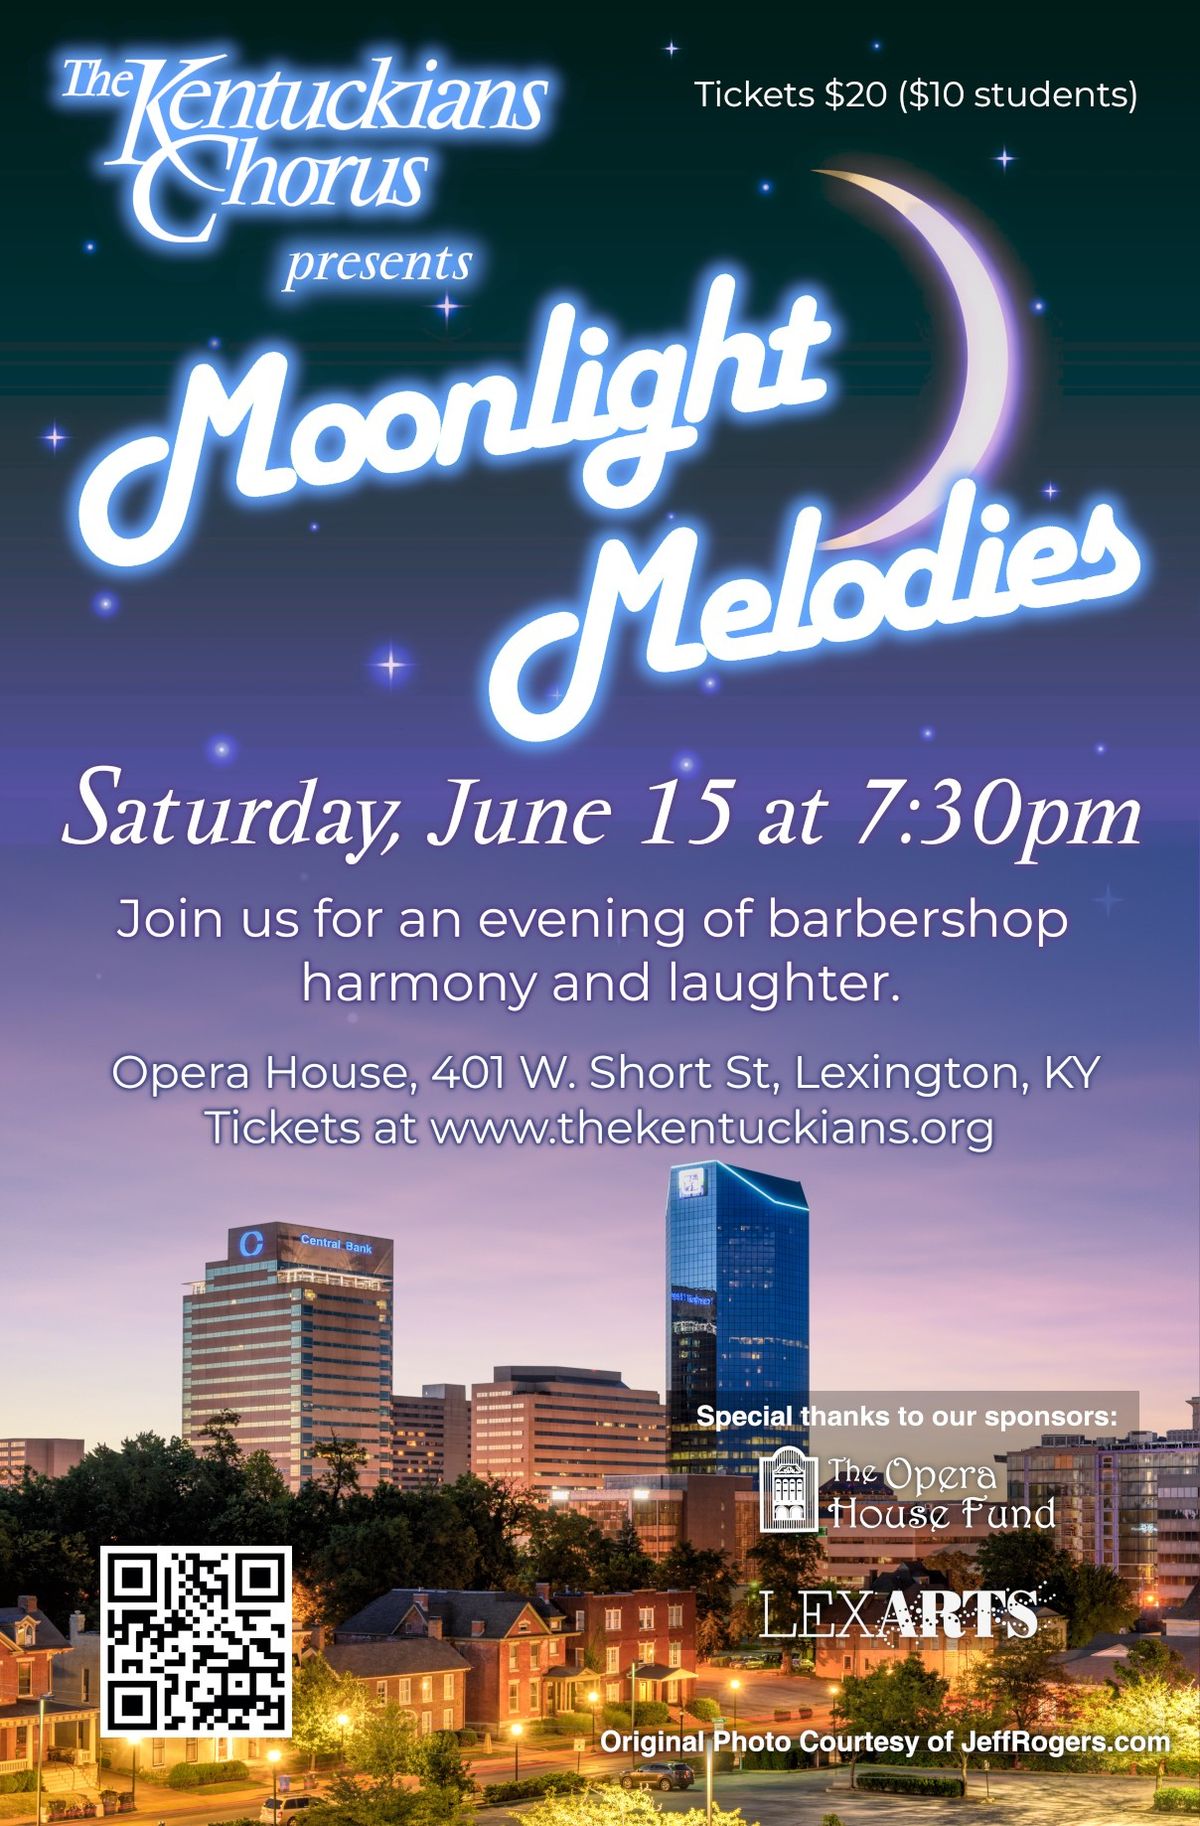 Moonlight Melodies - The Kentuckians Chorus